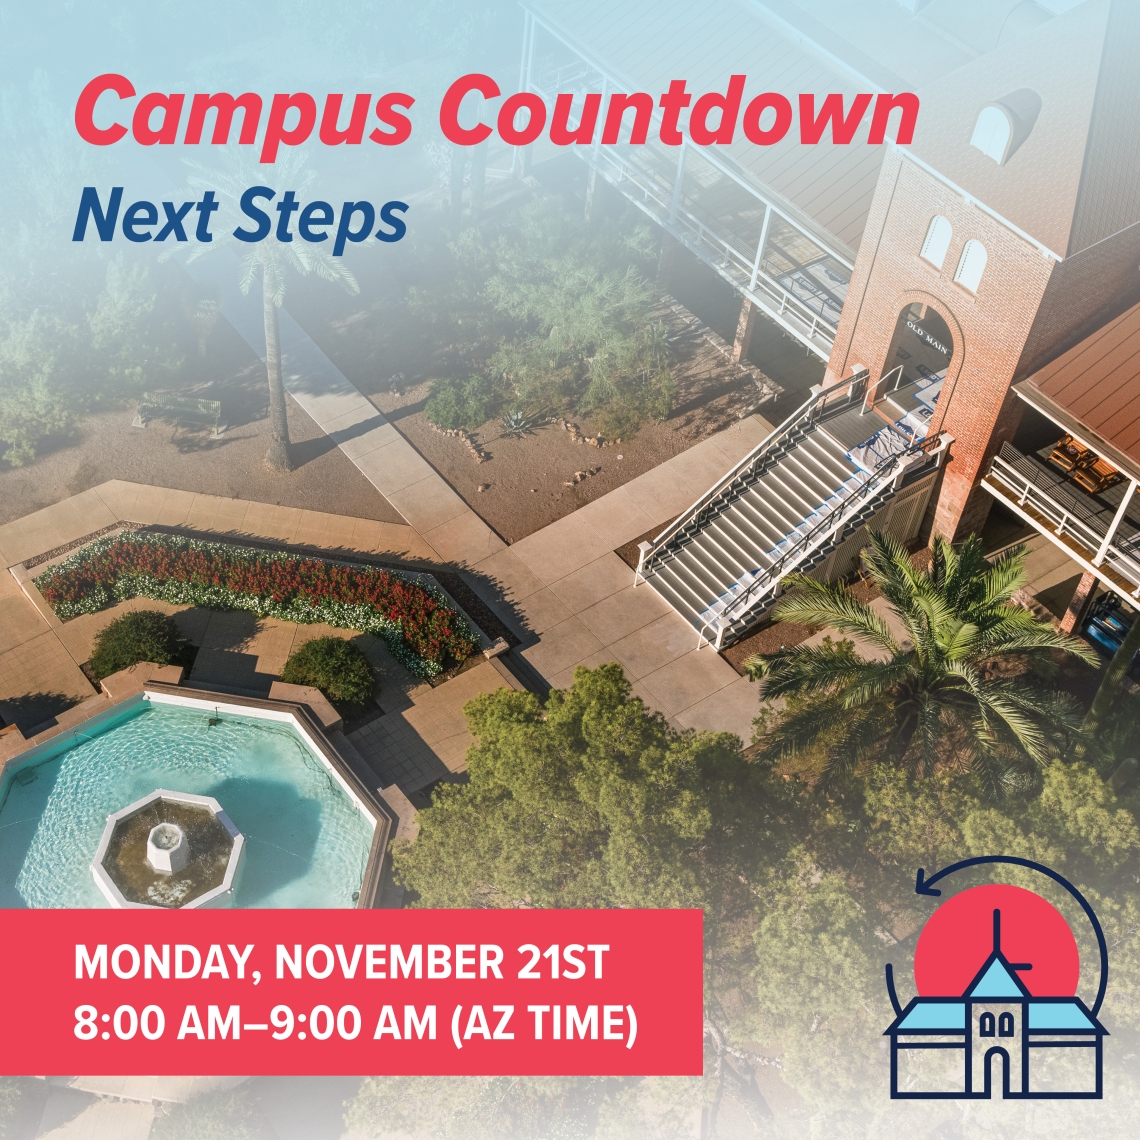 Campus Countdown Next Steps